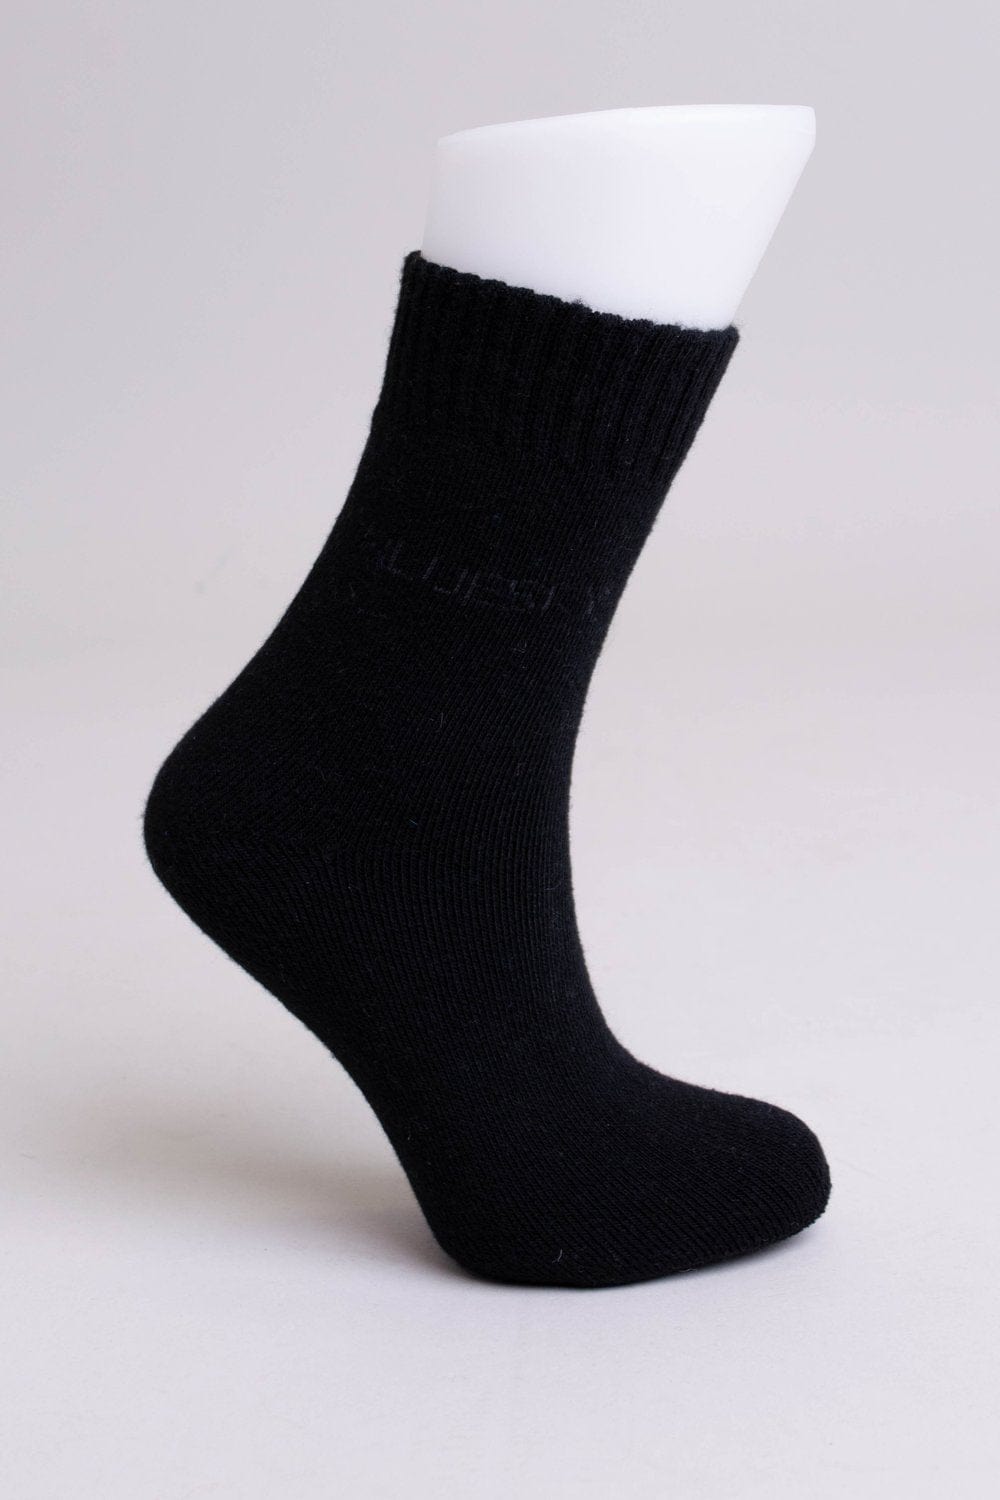 Blue Sky Women&#39;s Socks Black / L Men&#39;s Socks - Merino Wool